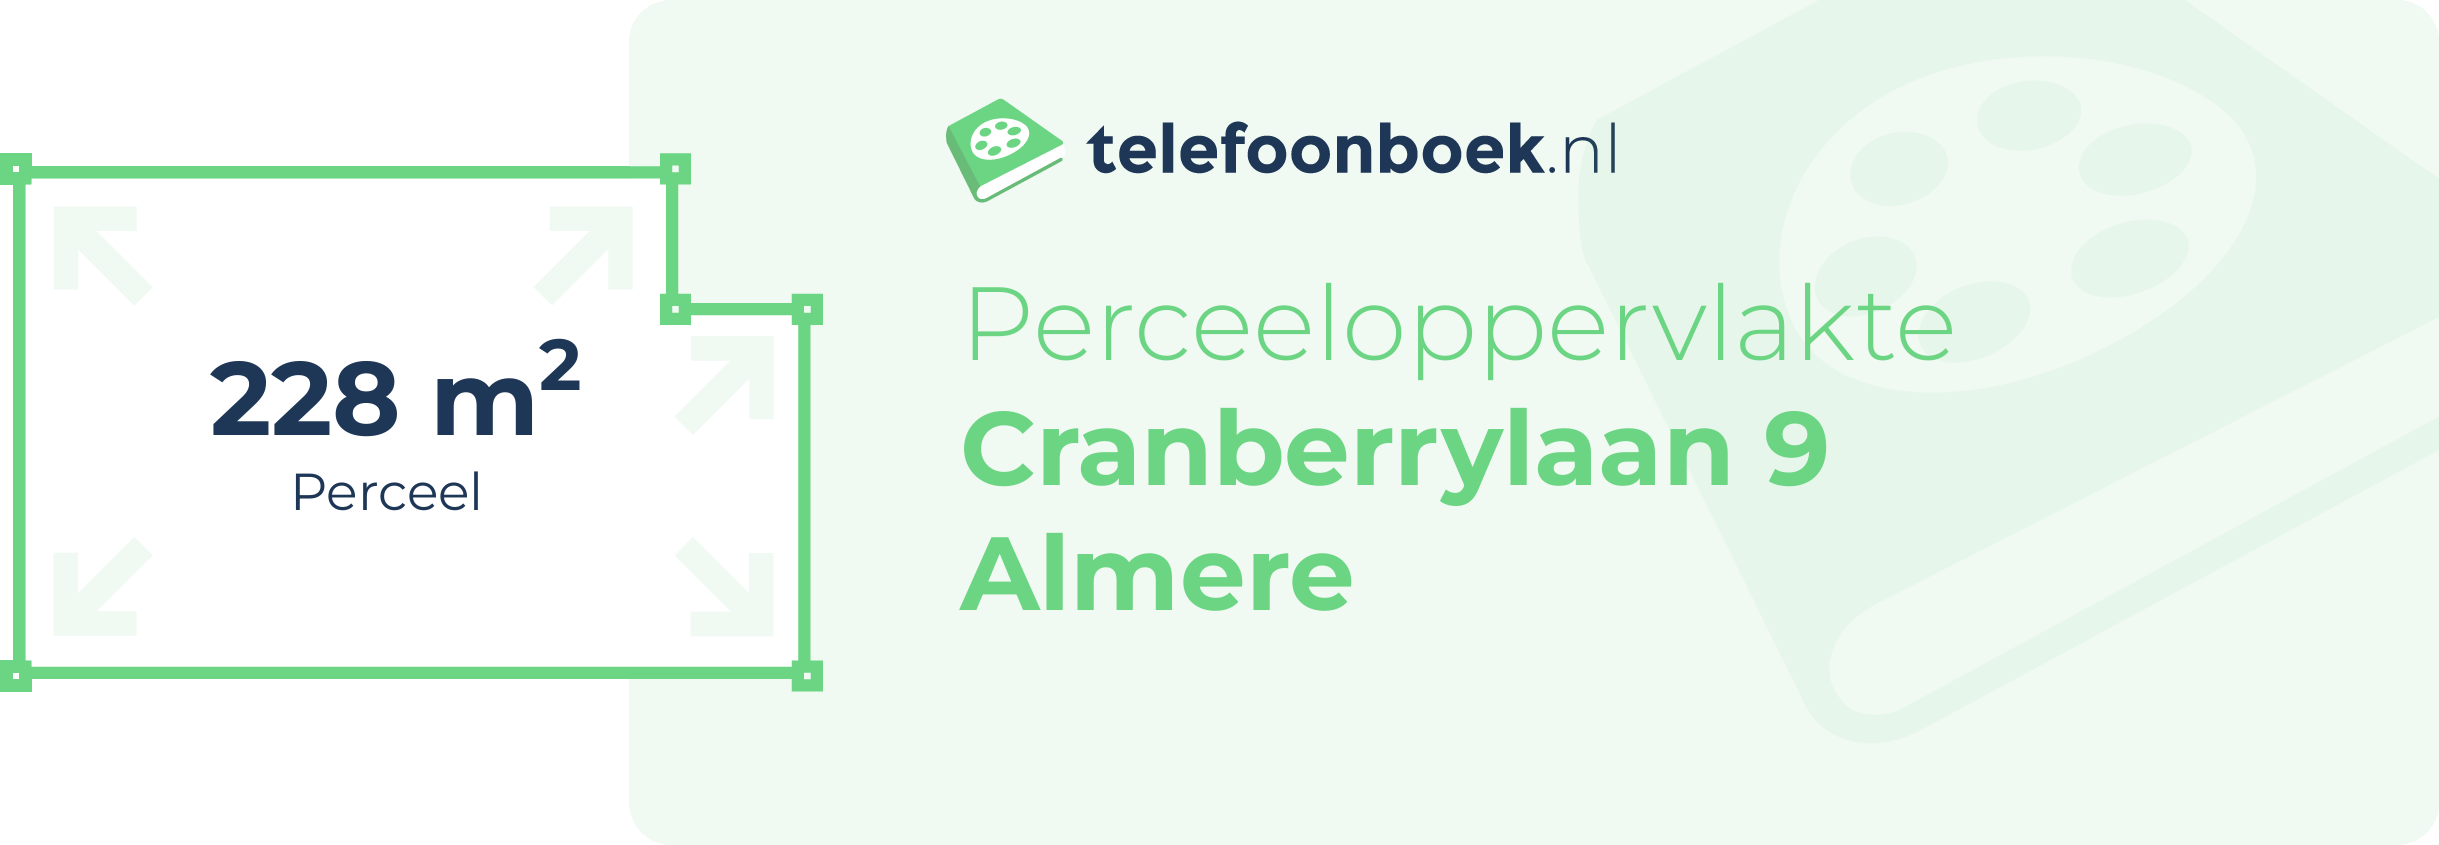 Perceeloppervlakte Cranberrylaan 9 Almere